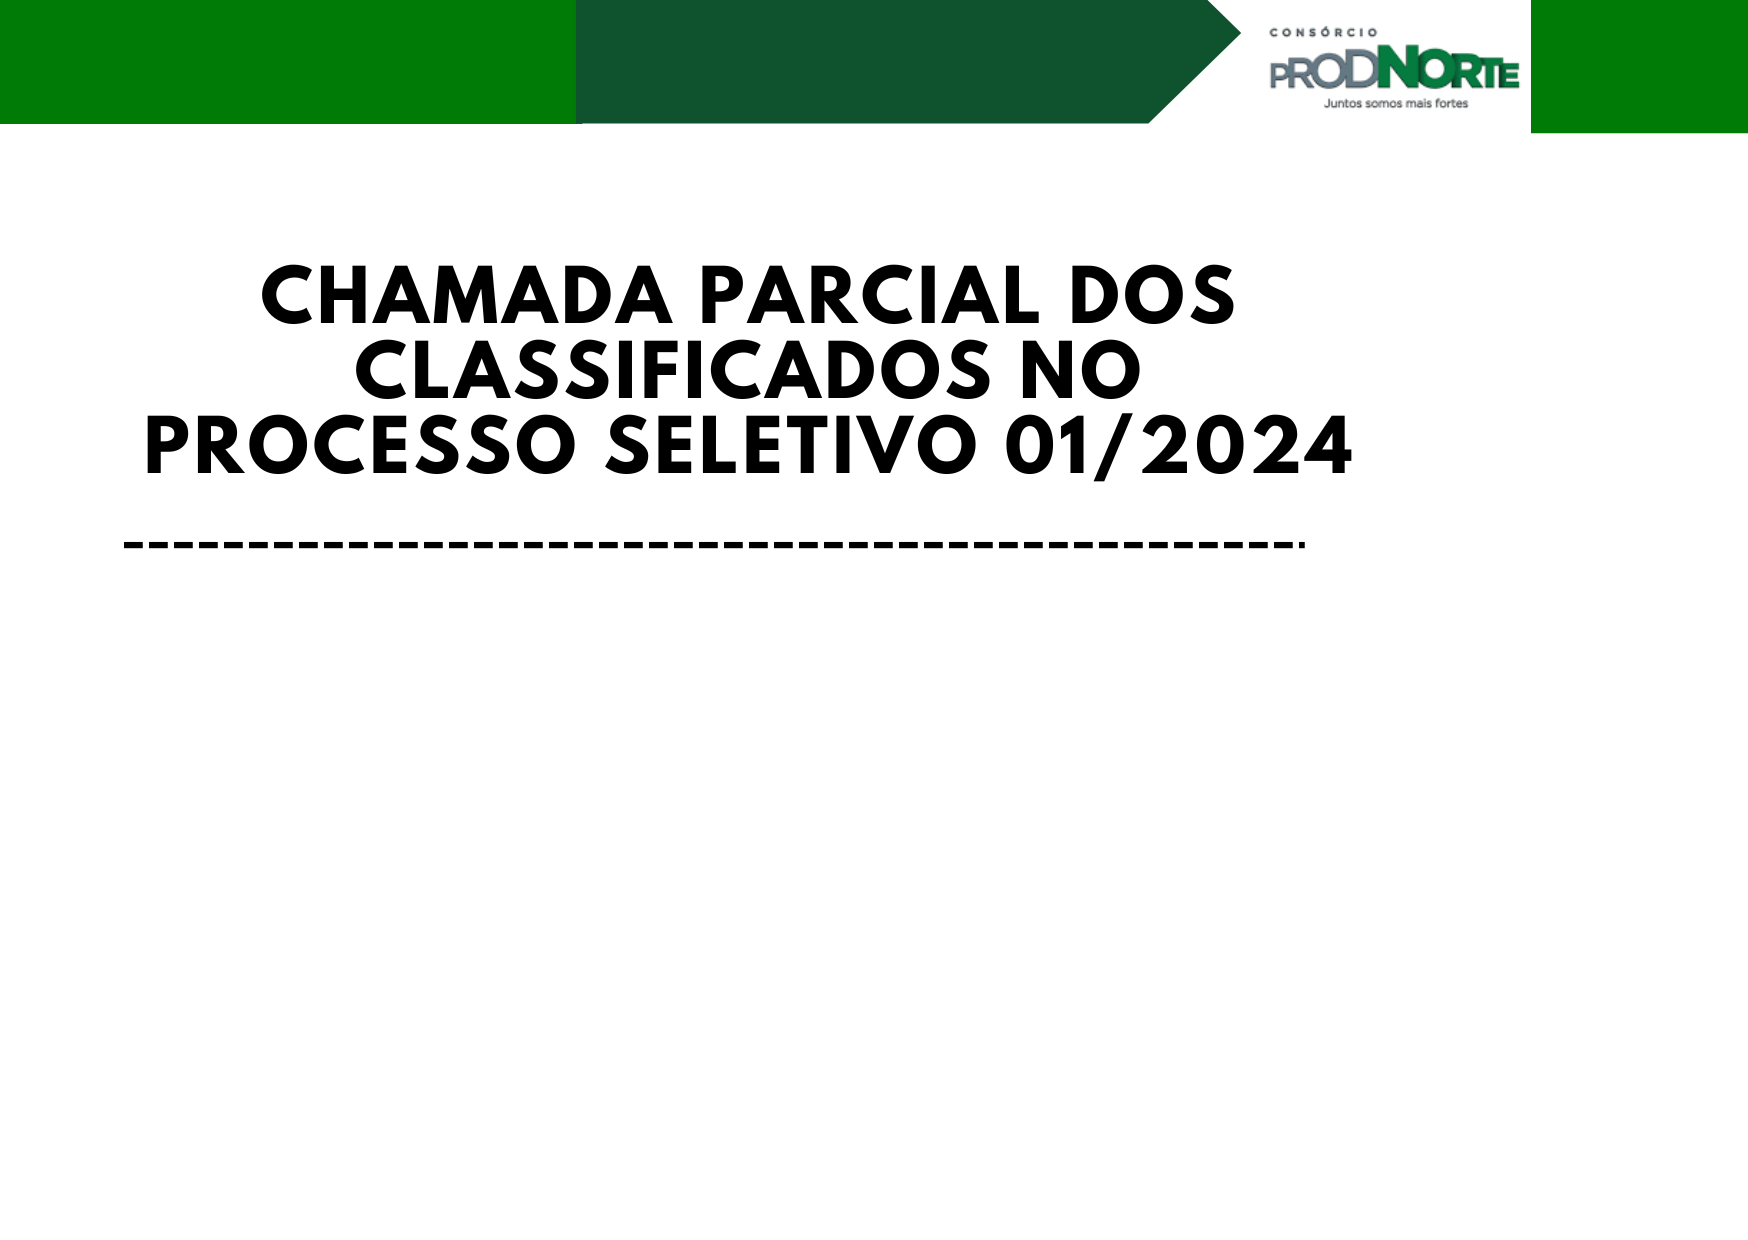 CHAMADA PARCIAL DOS CLASSIFICADOS NO PROCESSO SELETIVO 01/2024